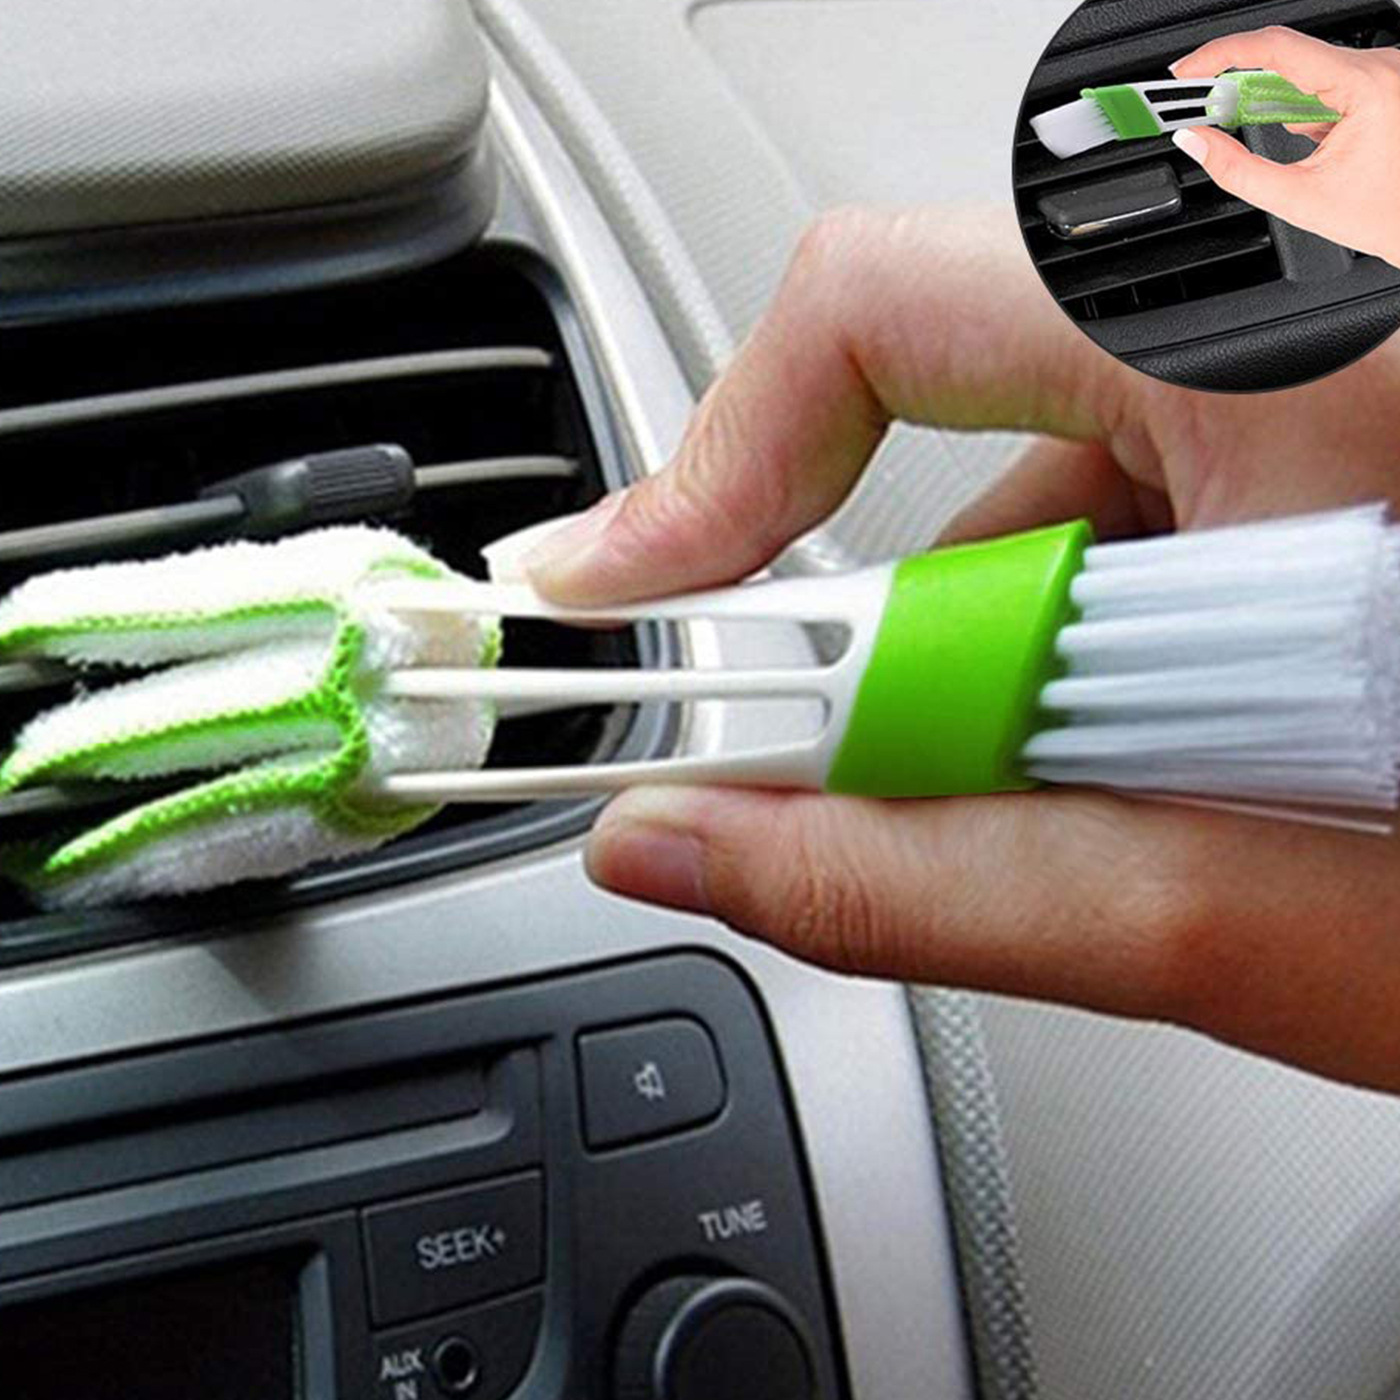 Car wash towel car mop tire dust brush car wash cleaning kit